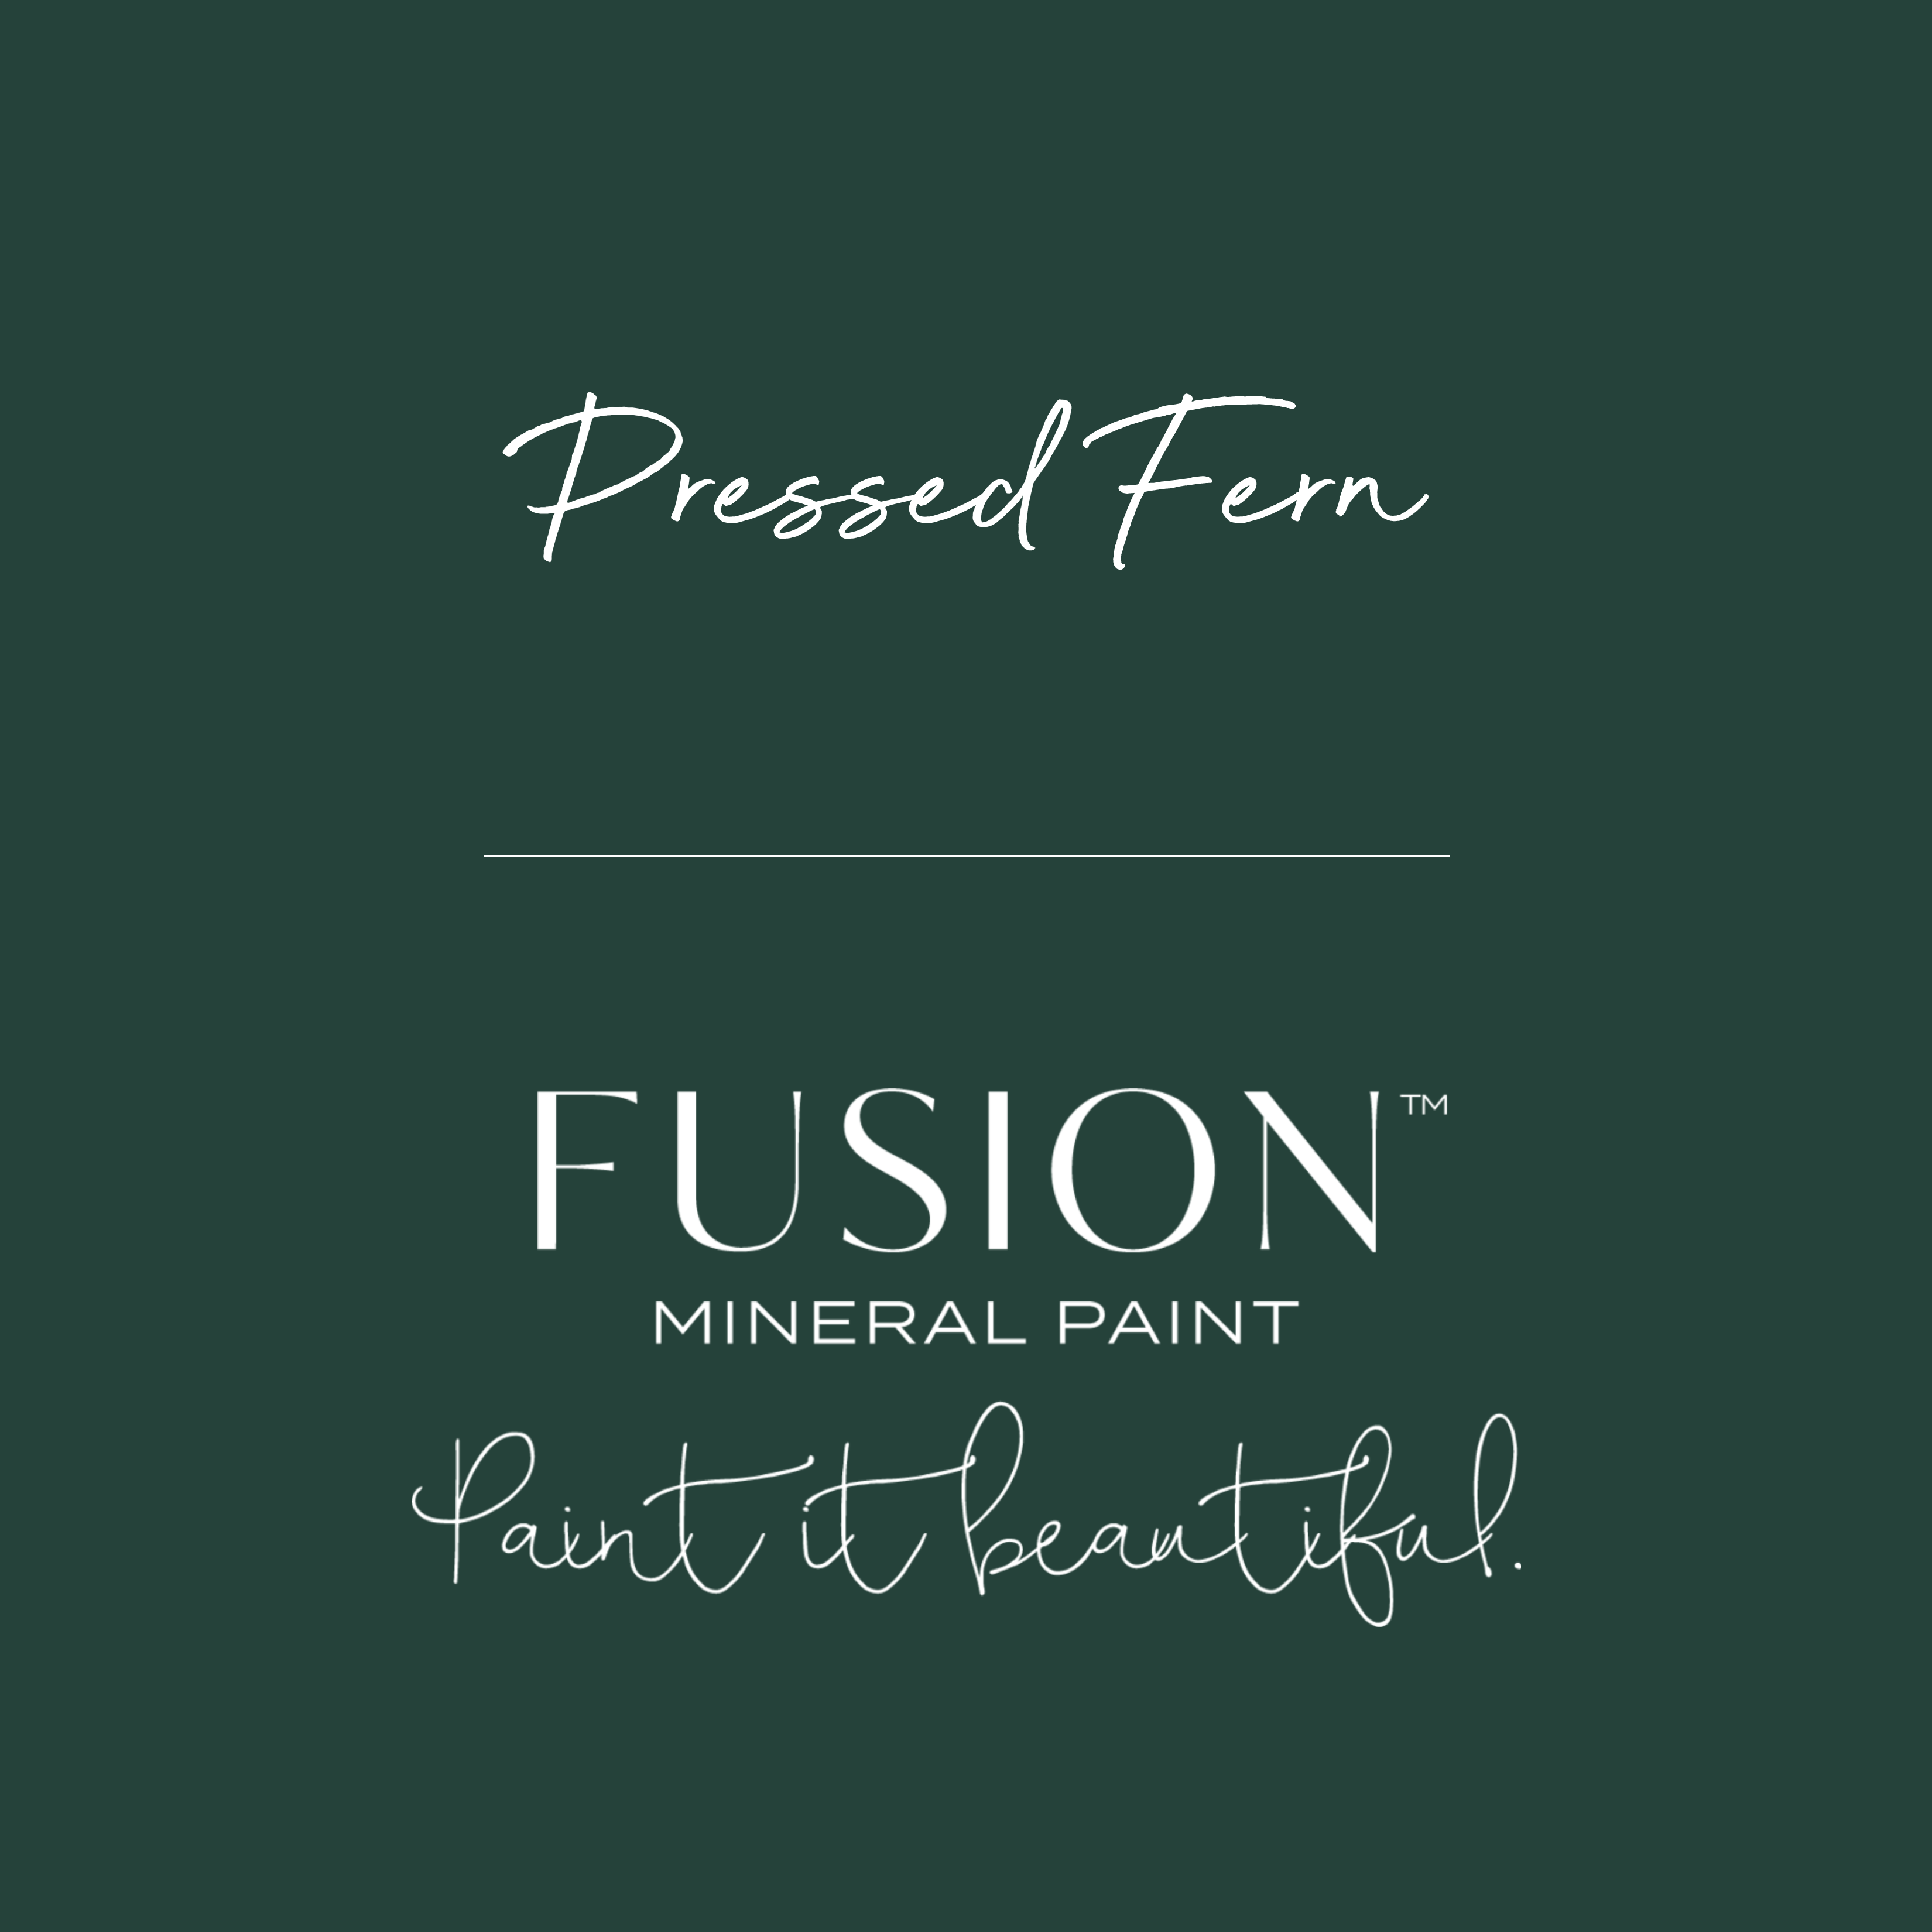 Pressed Fern | Fusion Mineral Paint | 500ml